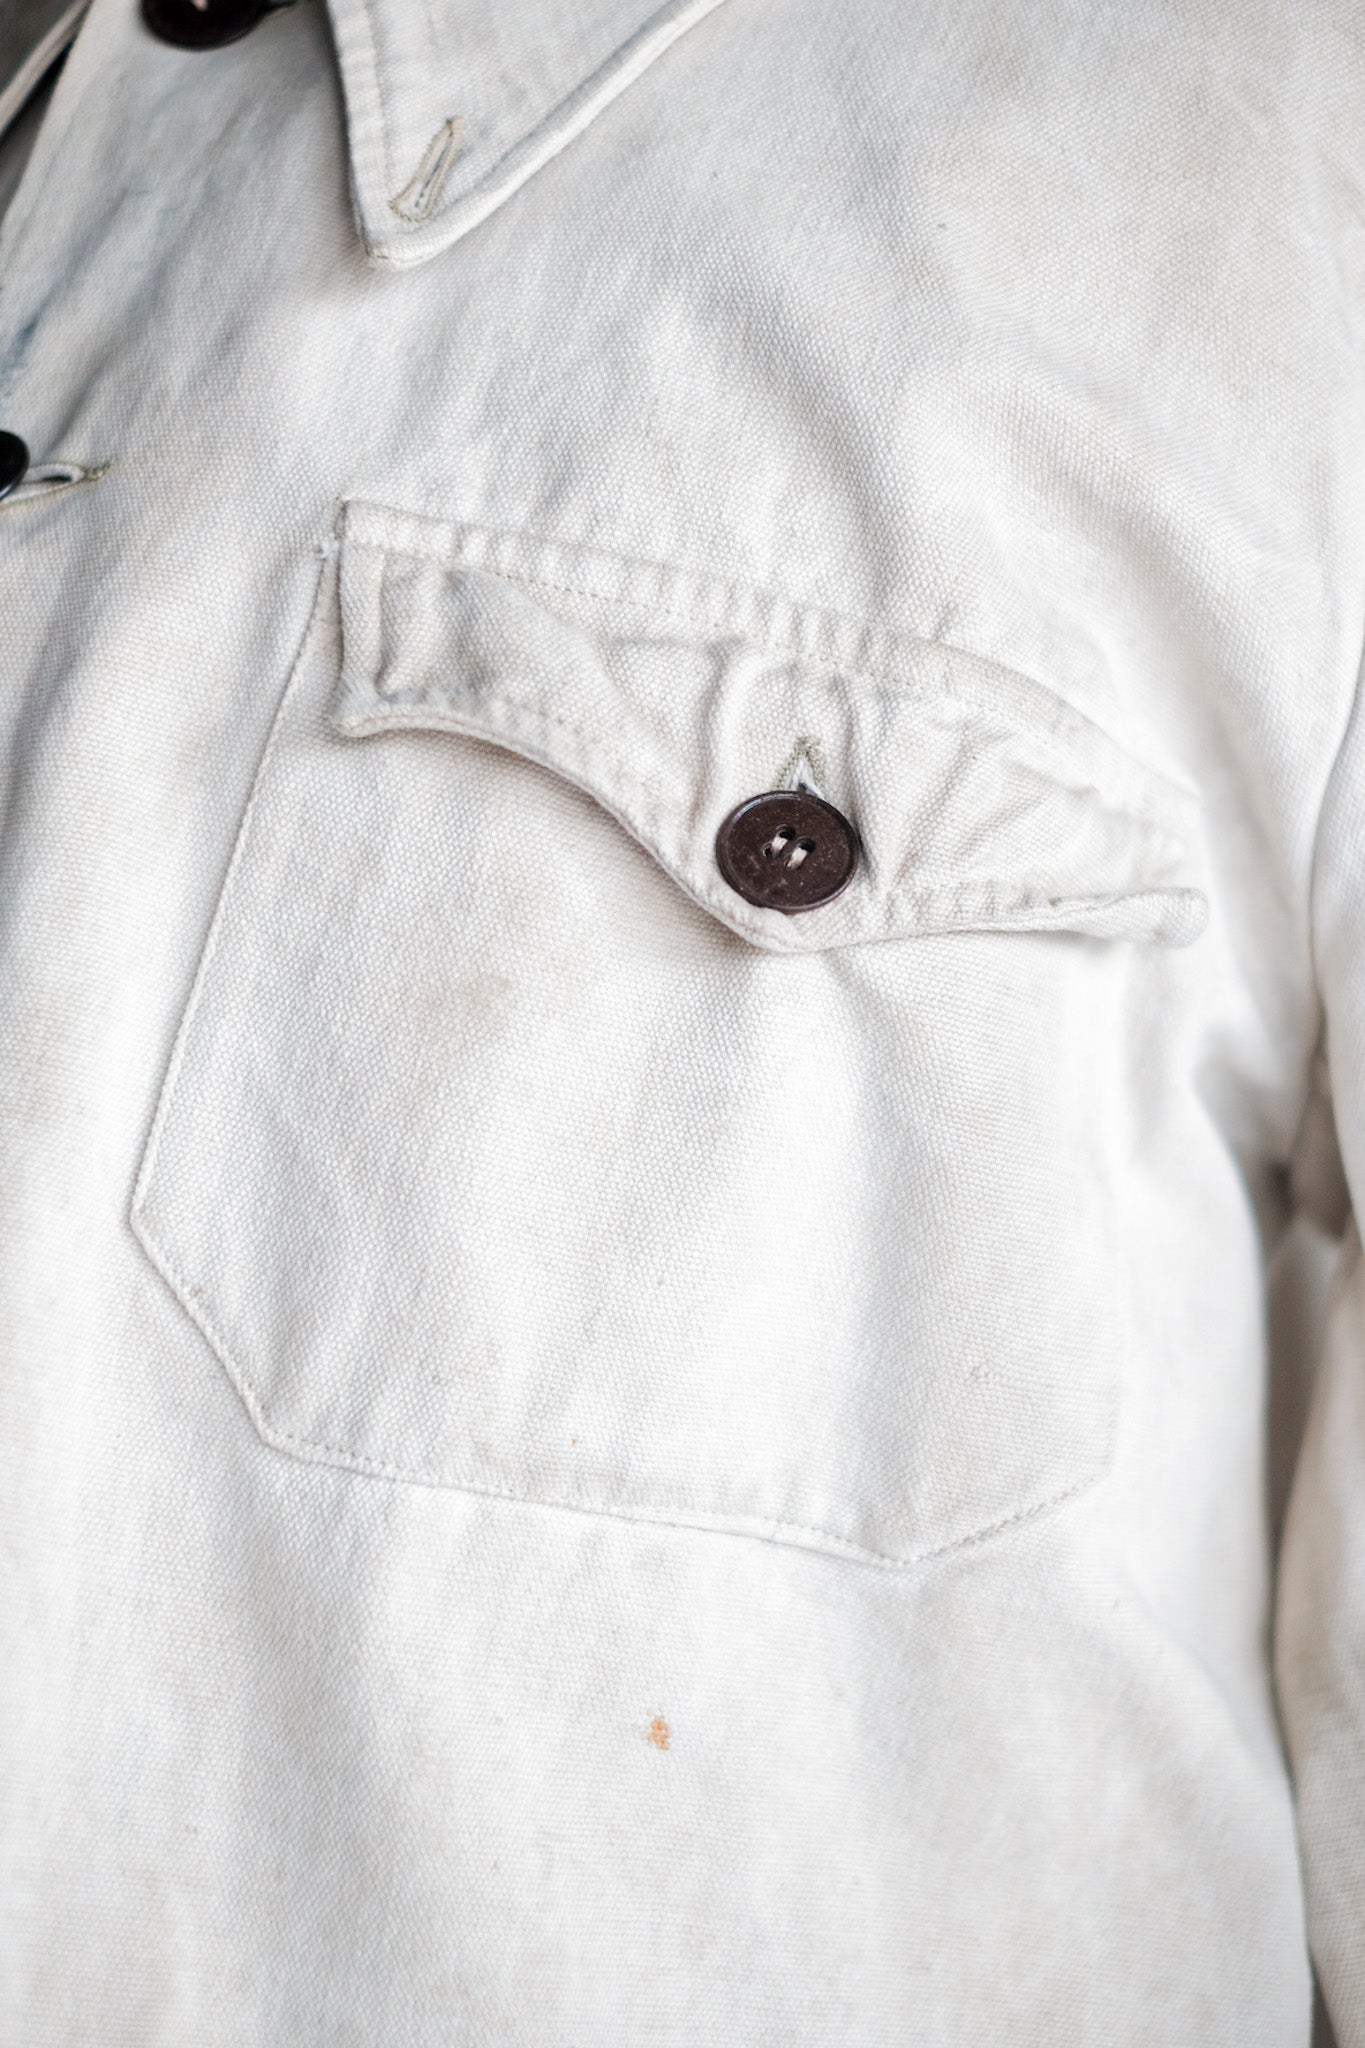 [~ 50's] French Vintage White Cotton Canvas Work Jacket